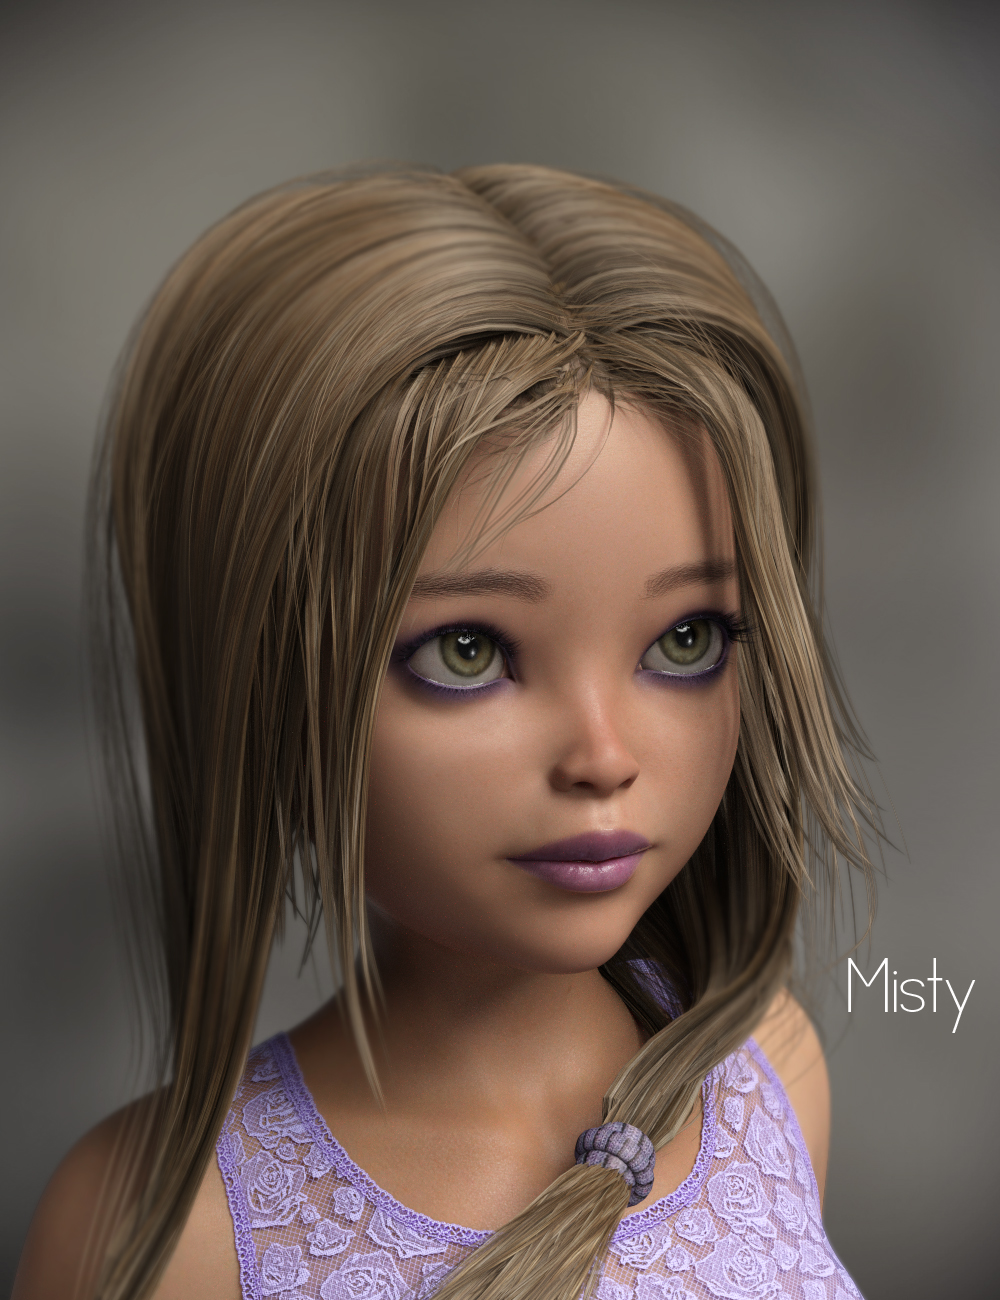 P3D Misty HD for Genesis 8 Female by: P3Design, 3D Models by Daz 3D